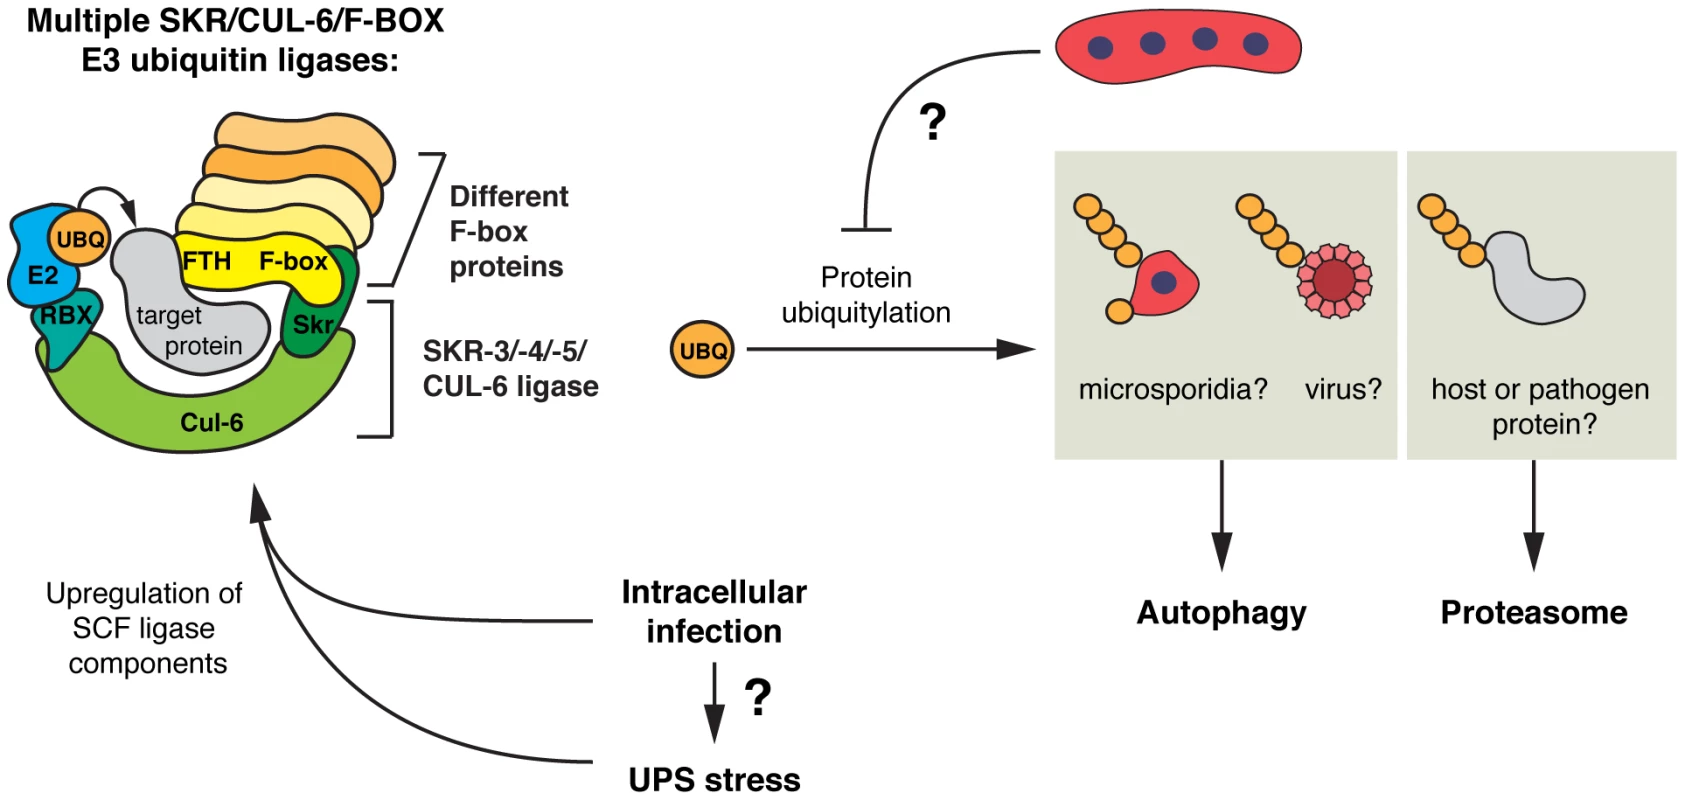 Model for SCF E3 ligases and ubiquitin-mediated responses to intracellular infection in <i>C. elegans</i>.